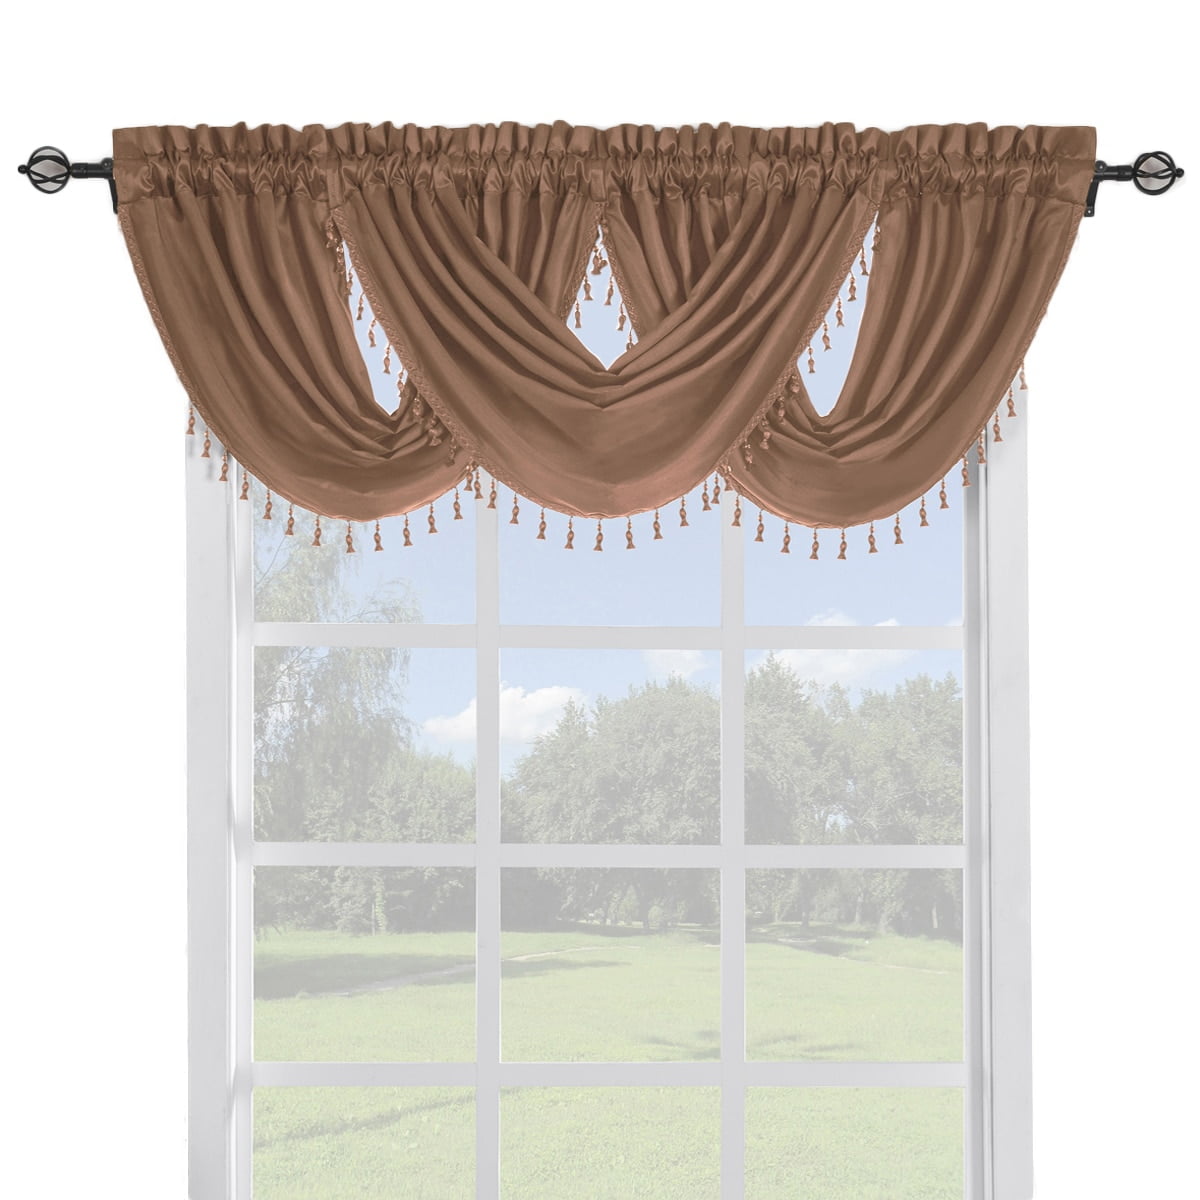 Hyatt Luxurious window treatment Curtain Panel  OR waterfall valance new colors 